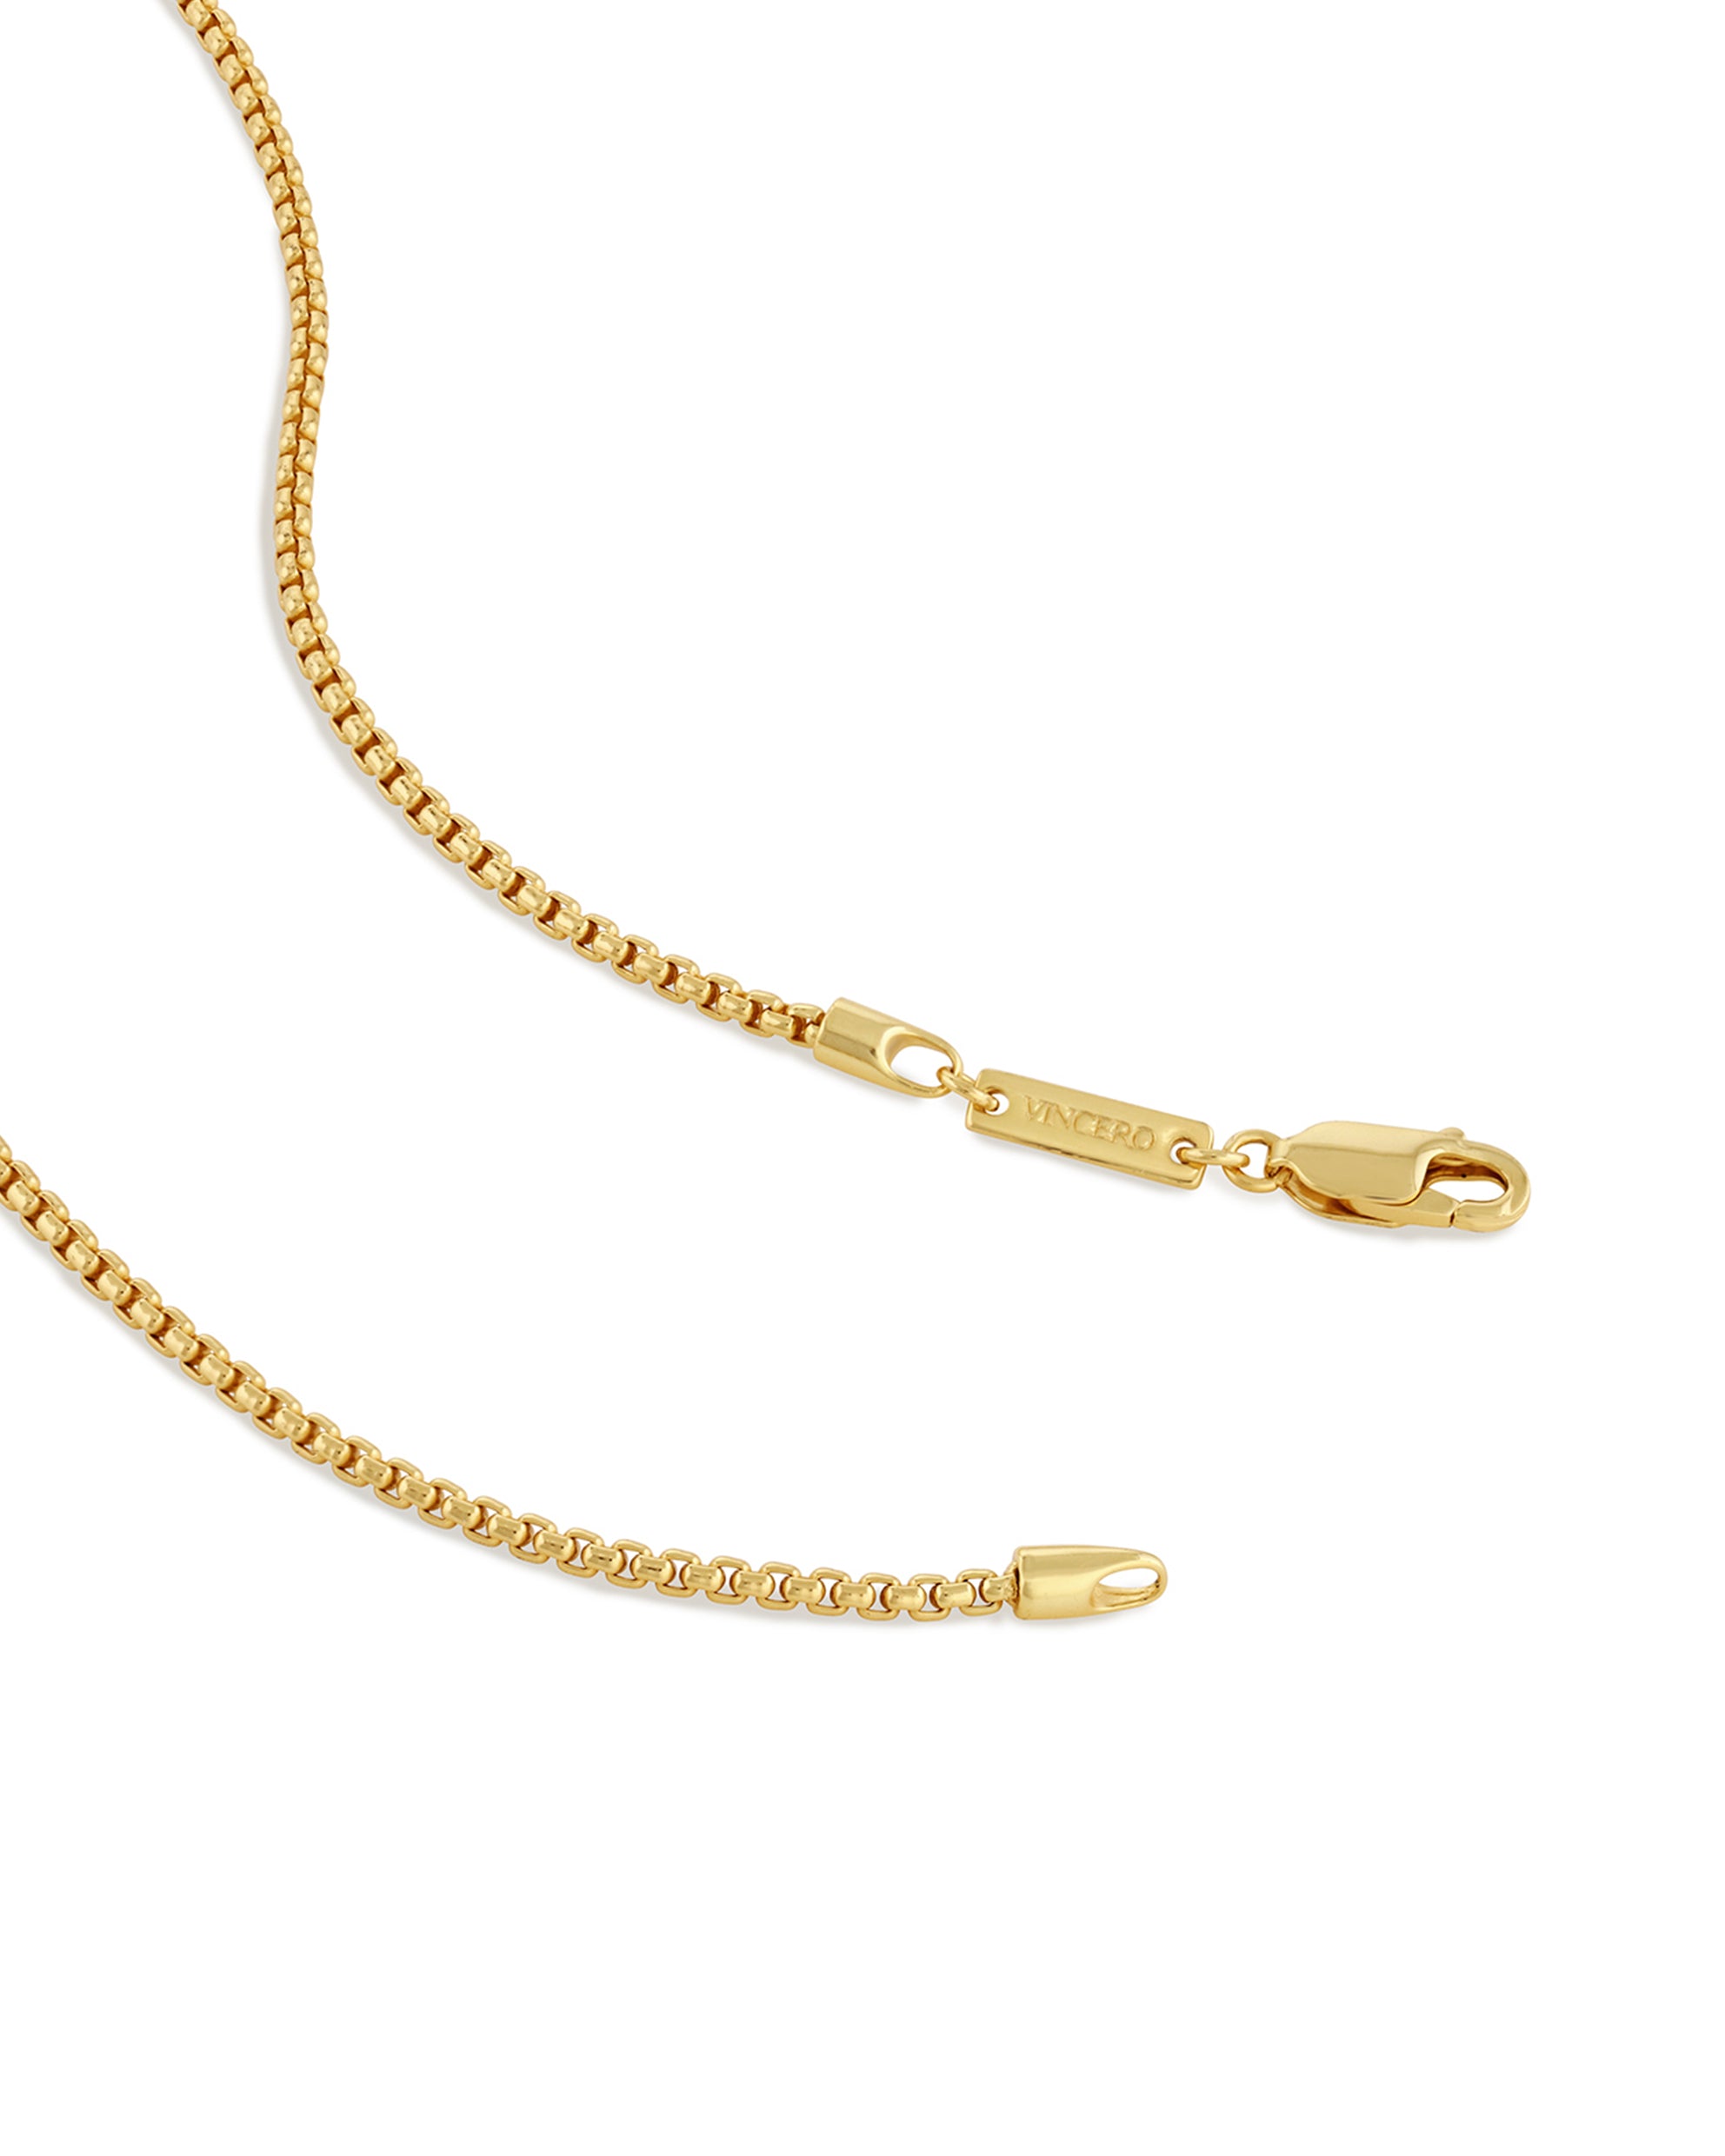 Box Chain Necklace in 18K Yellow Gold, 3.4mm | David Yurman